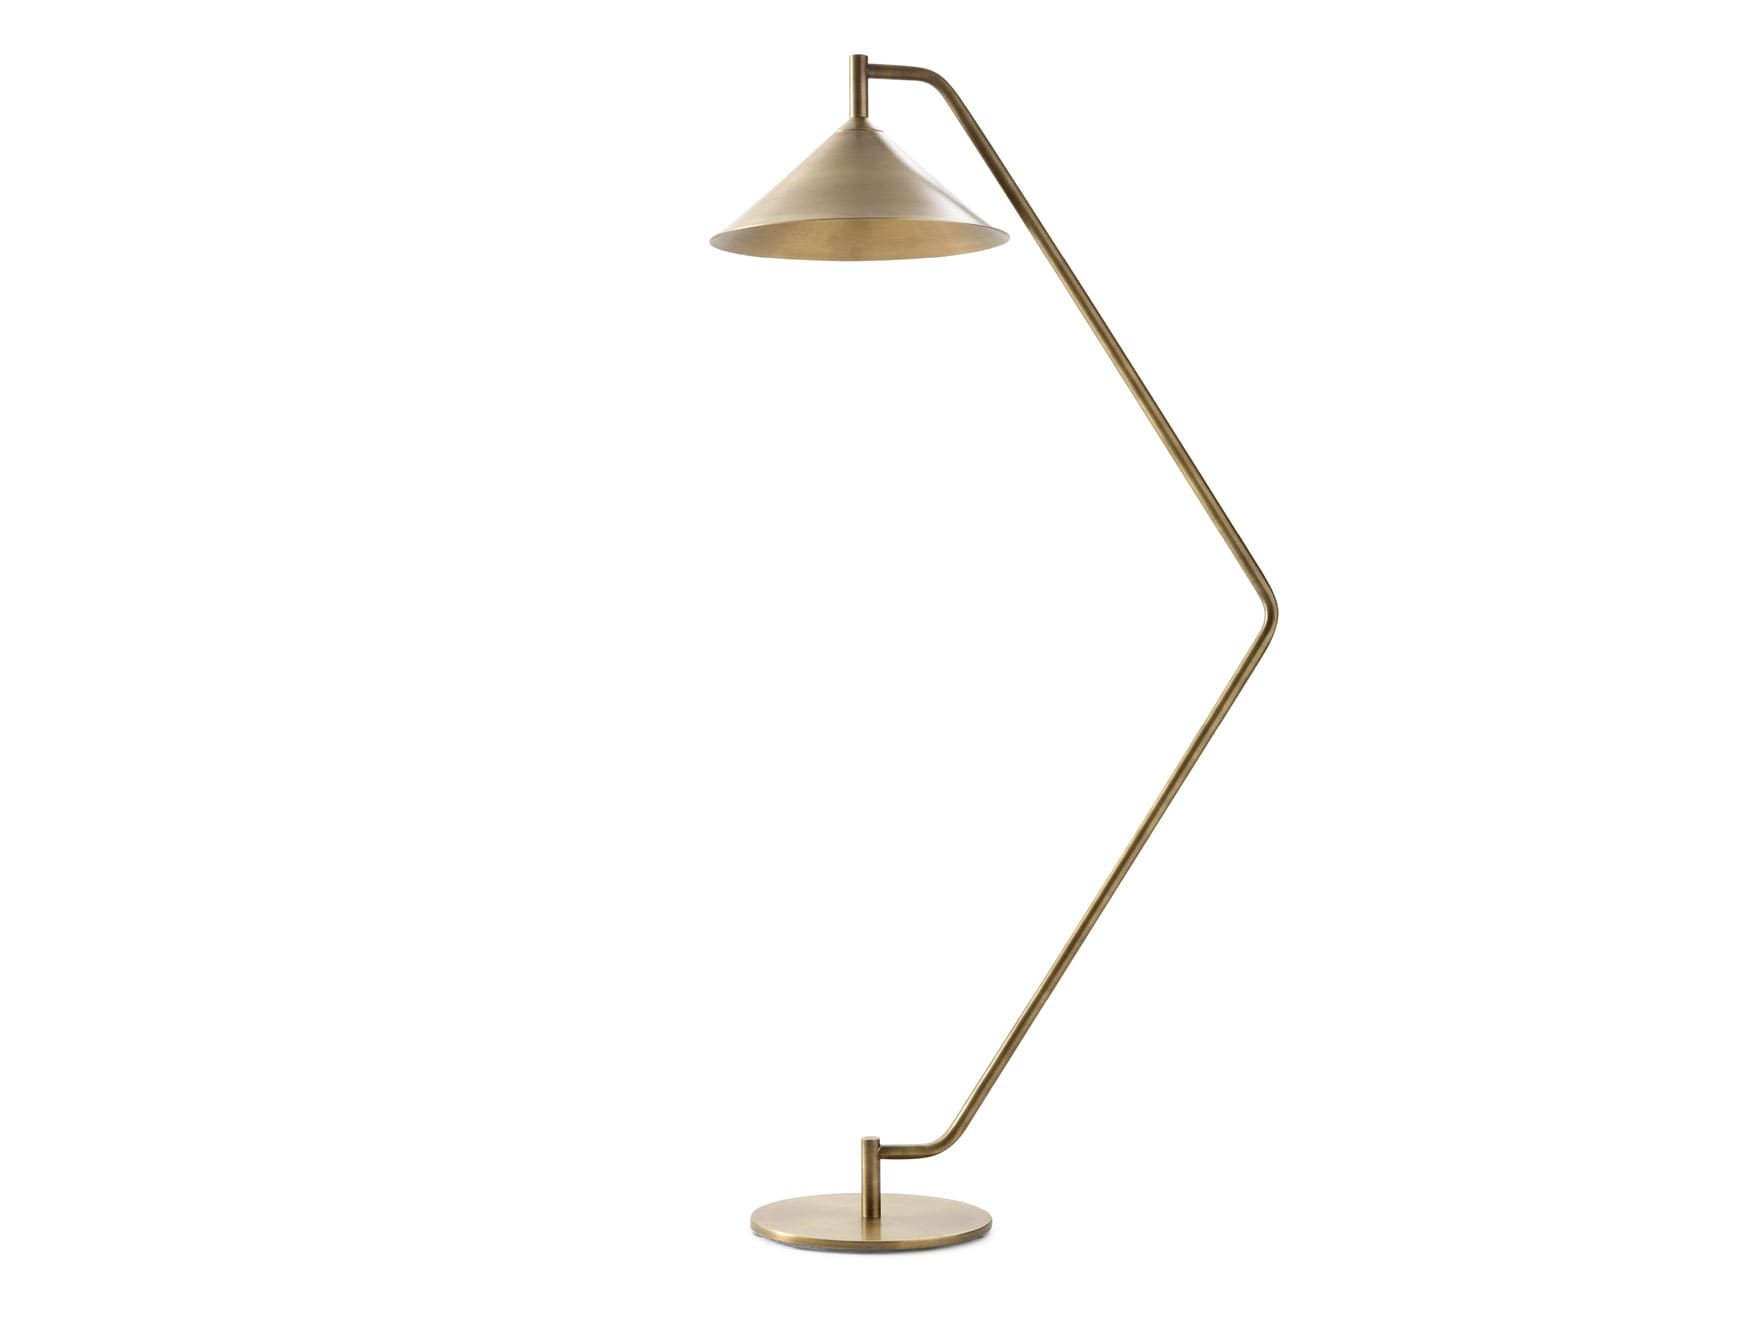 Flash modern Italian floor lamp with gold metal